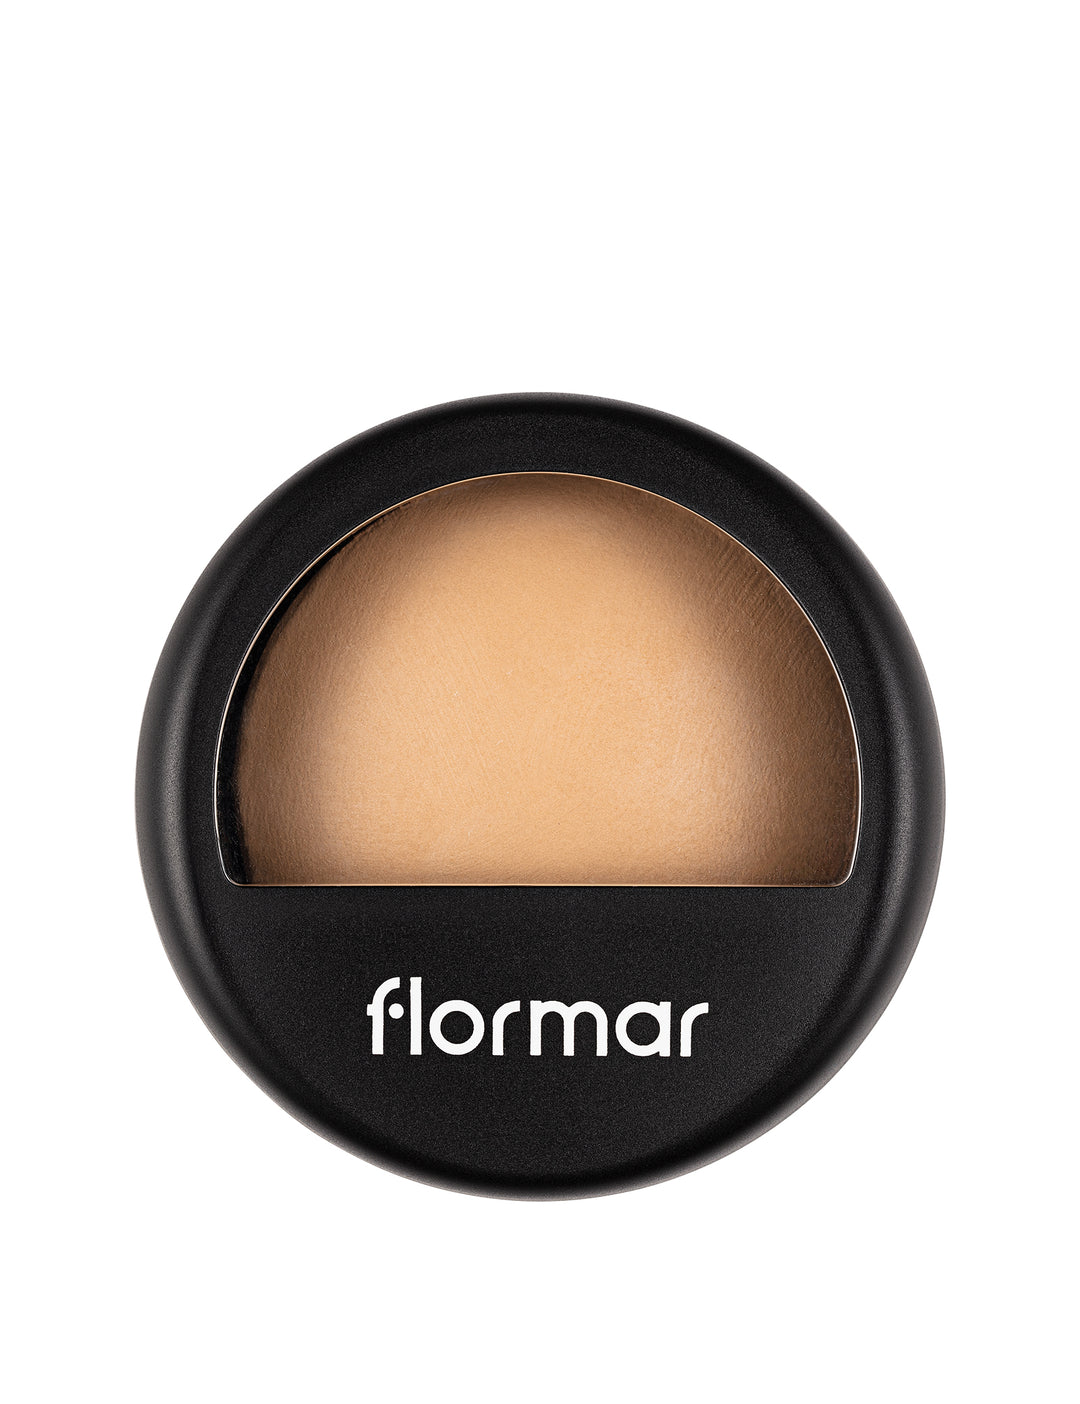 Flormar Baked Powder